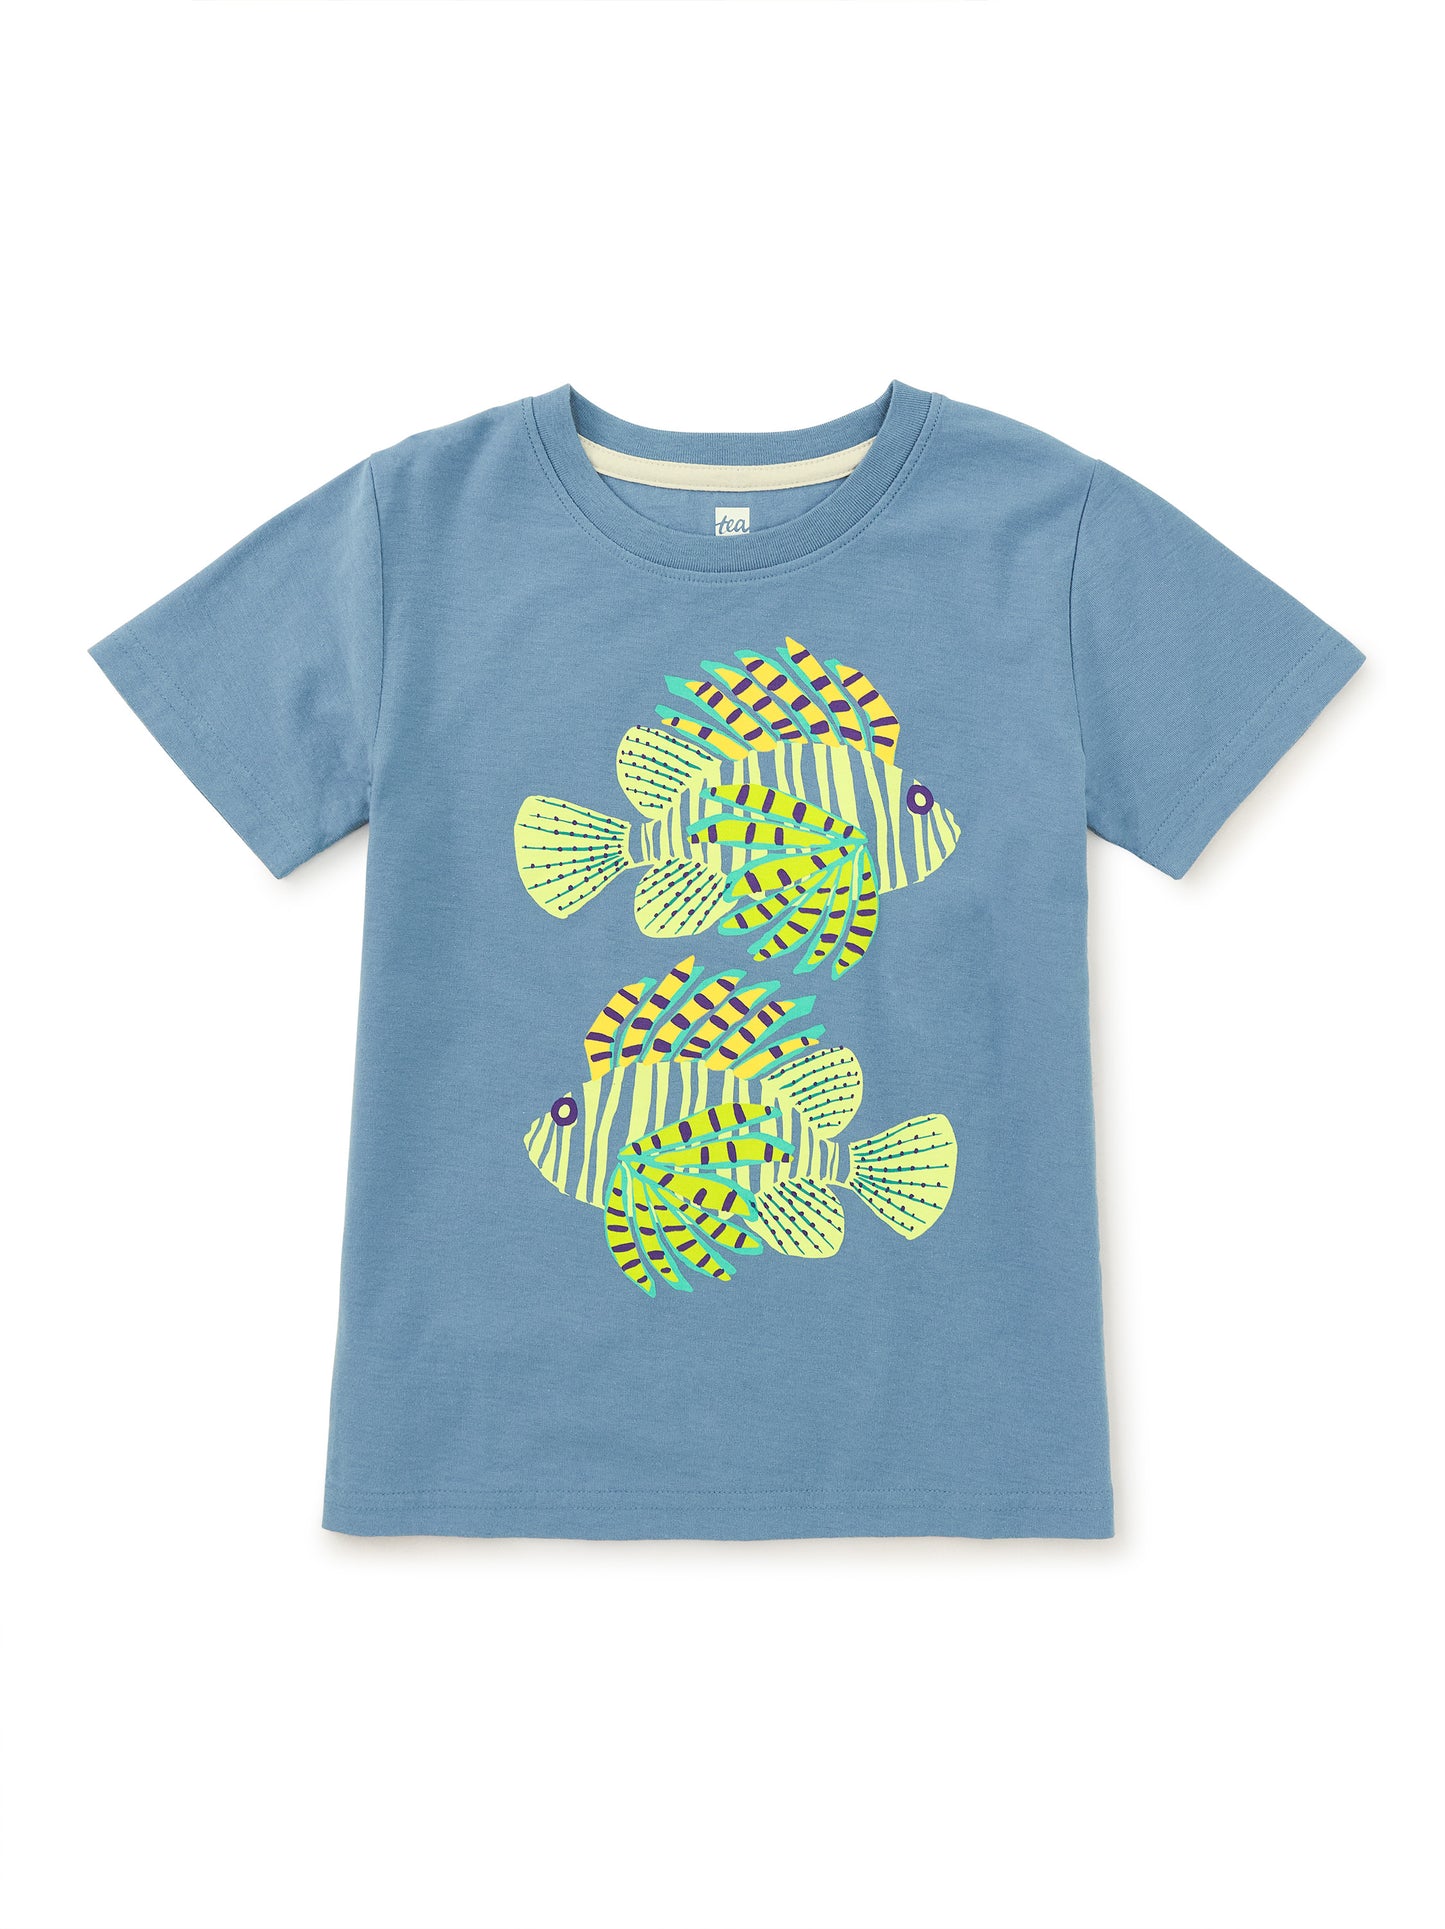 Lionfish Graphic Tee / Coronet Blue